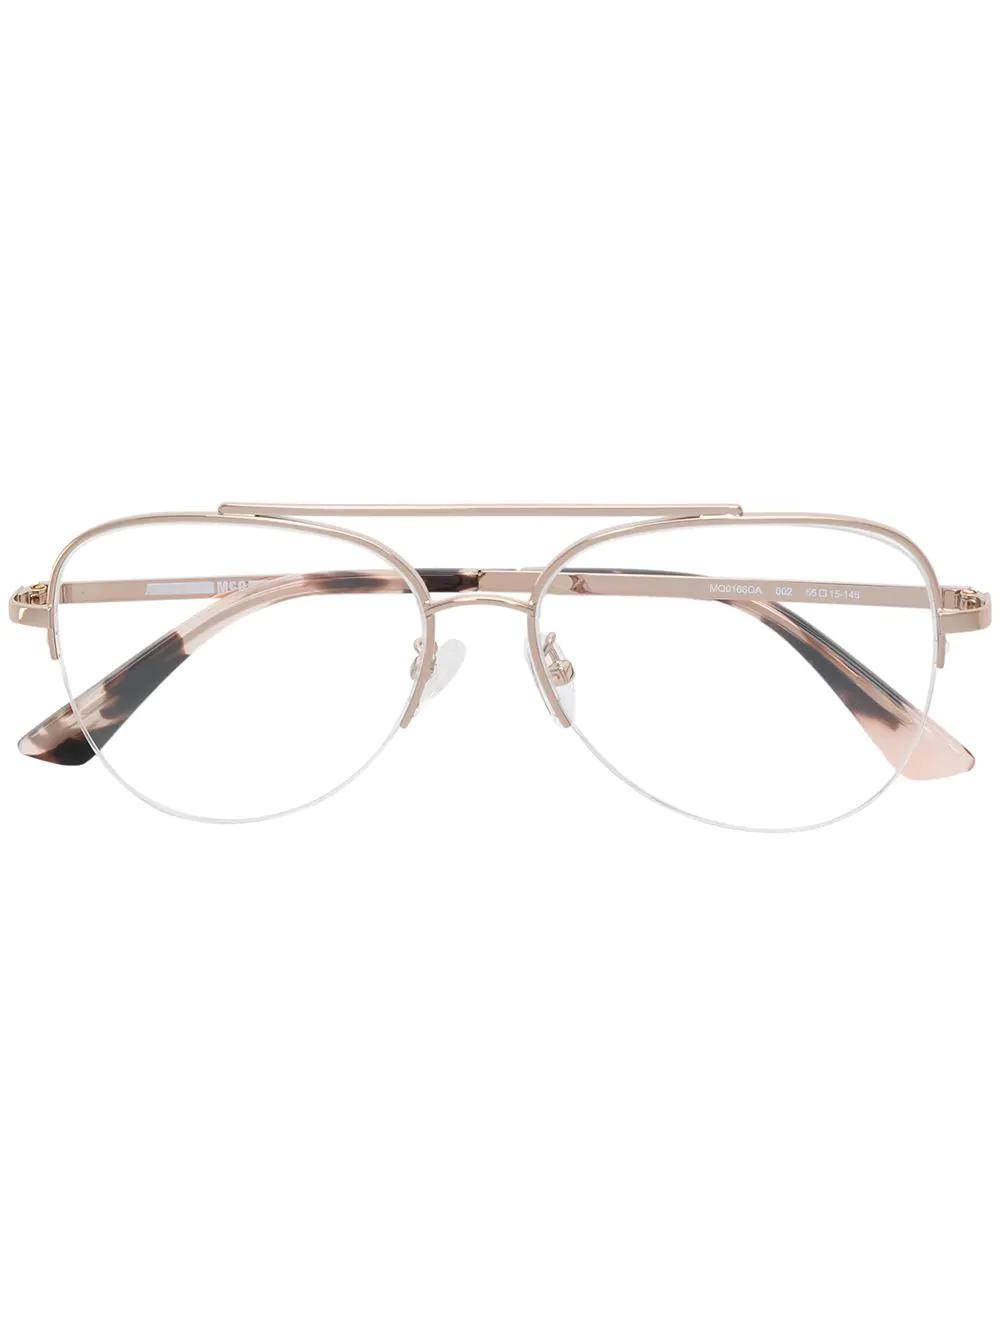 Mcq By Alexander Mcqueen Eyewear Aviator Glasses - Gold | ModeSens